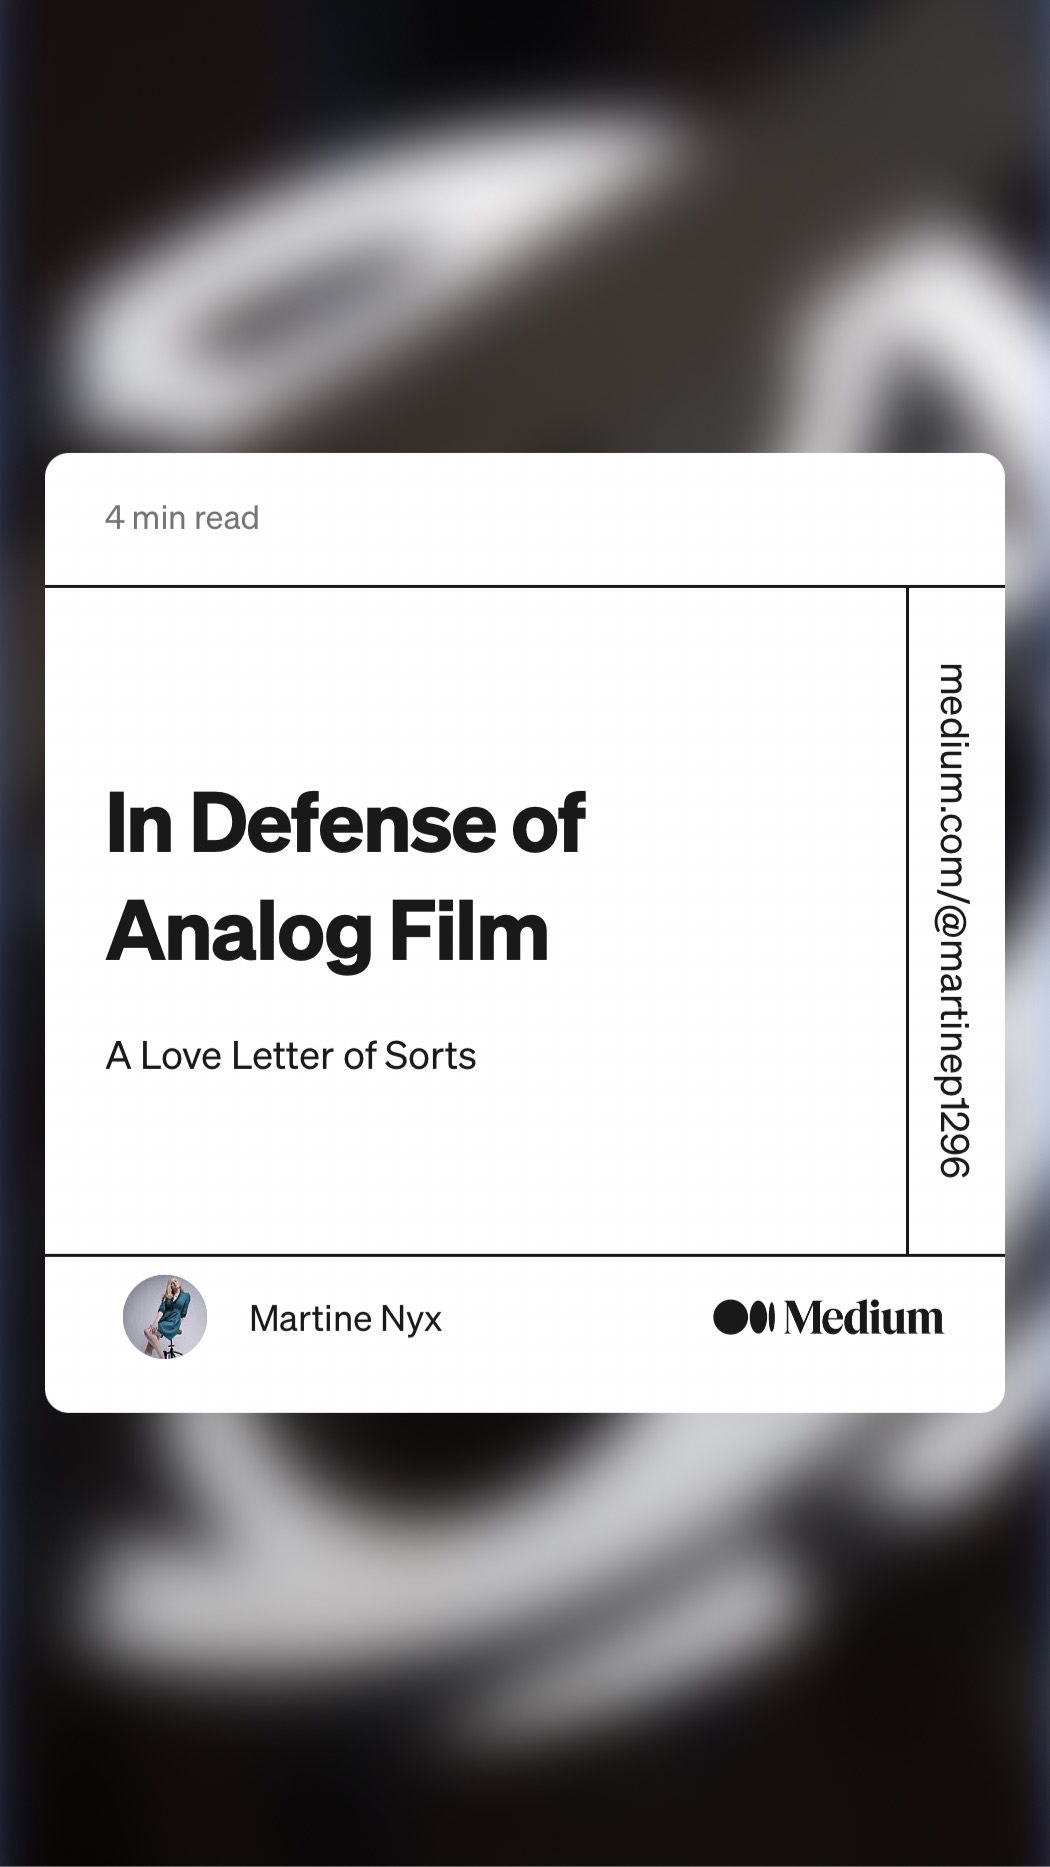 4 min read

In Defense of
Analog Film

A Love Letter of Sorts

3
@
2
Cc
3
a
0
3
~~
®
3
®
=
3
@
pA
nN
[Co]
DN

¥ | Martine Nyx @0 Medium
ww

__—